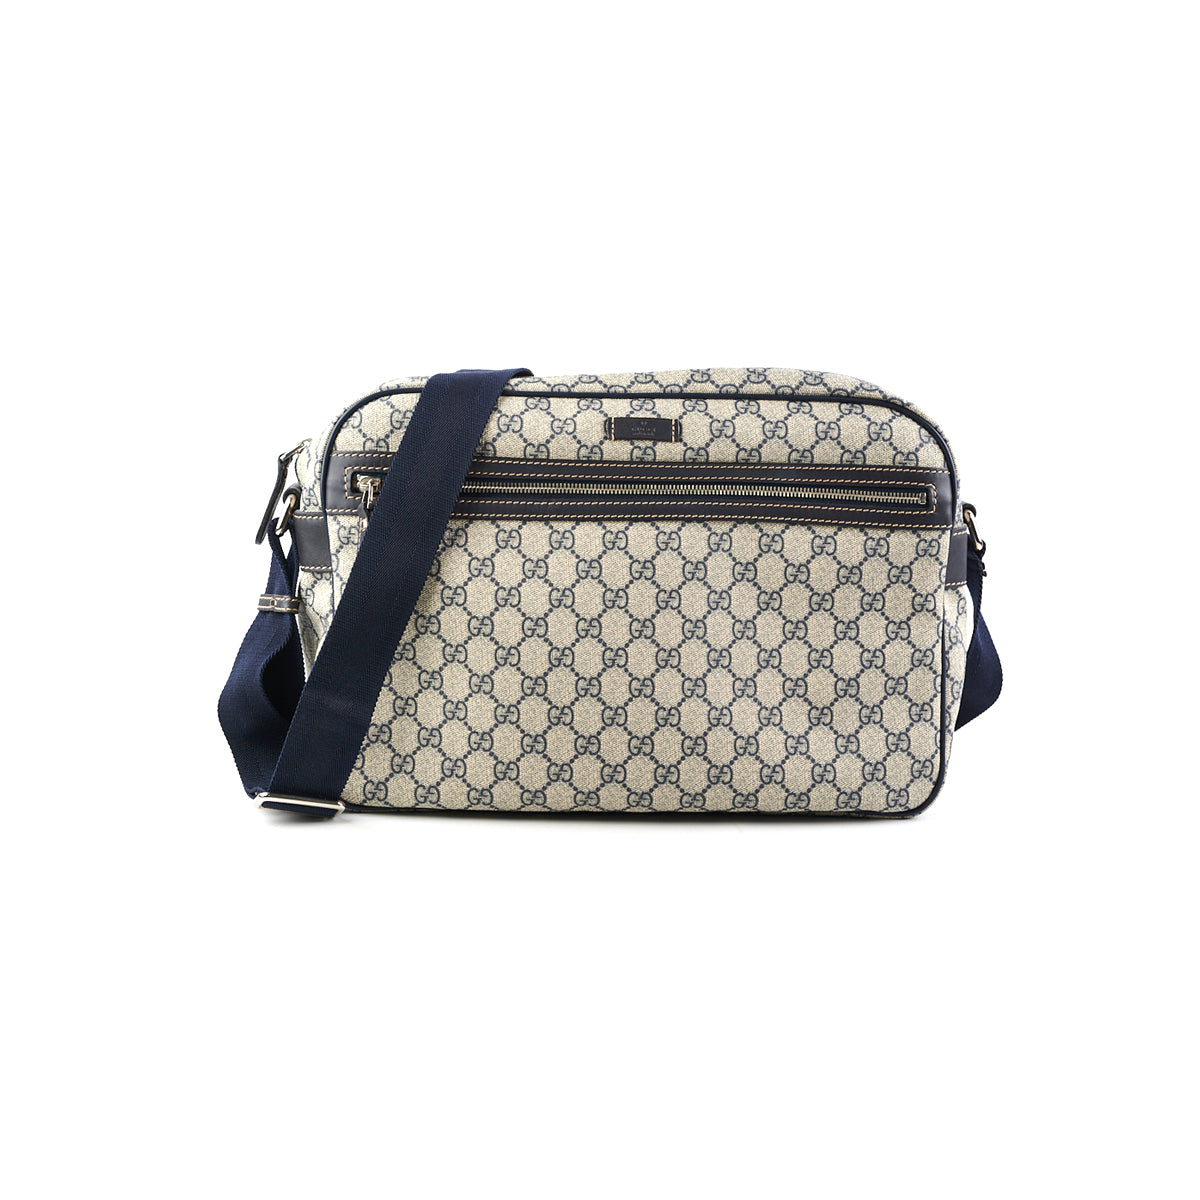 Gucci GG Supreme Navy Monogram Laptop Bag - THE PURSE AFFAIR